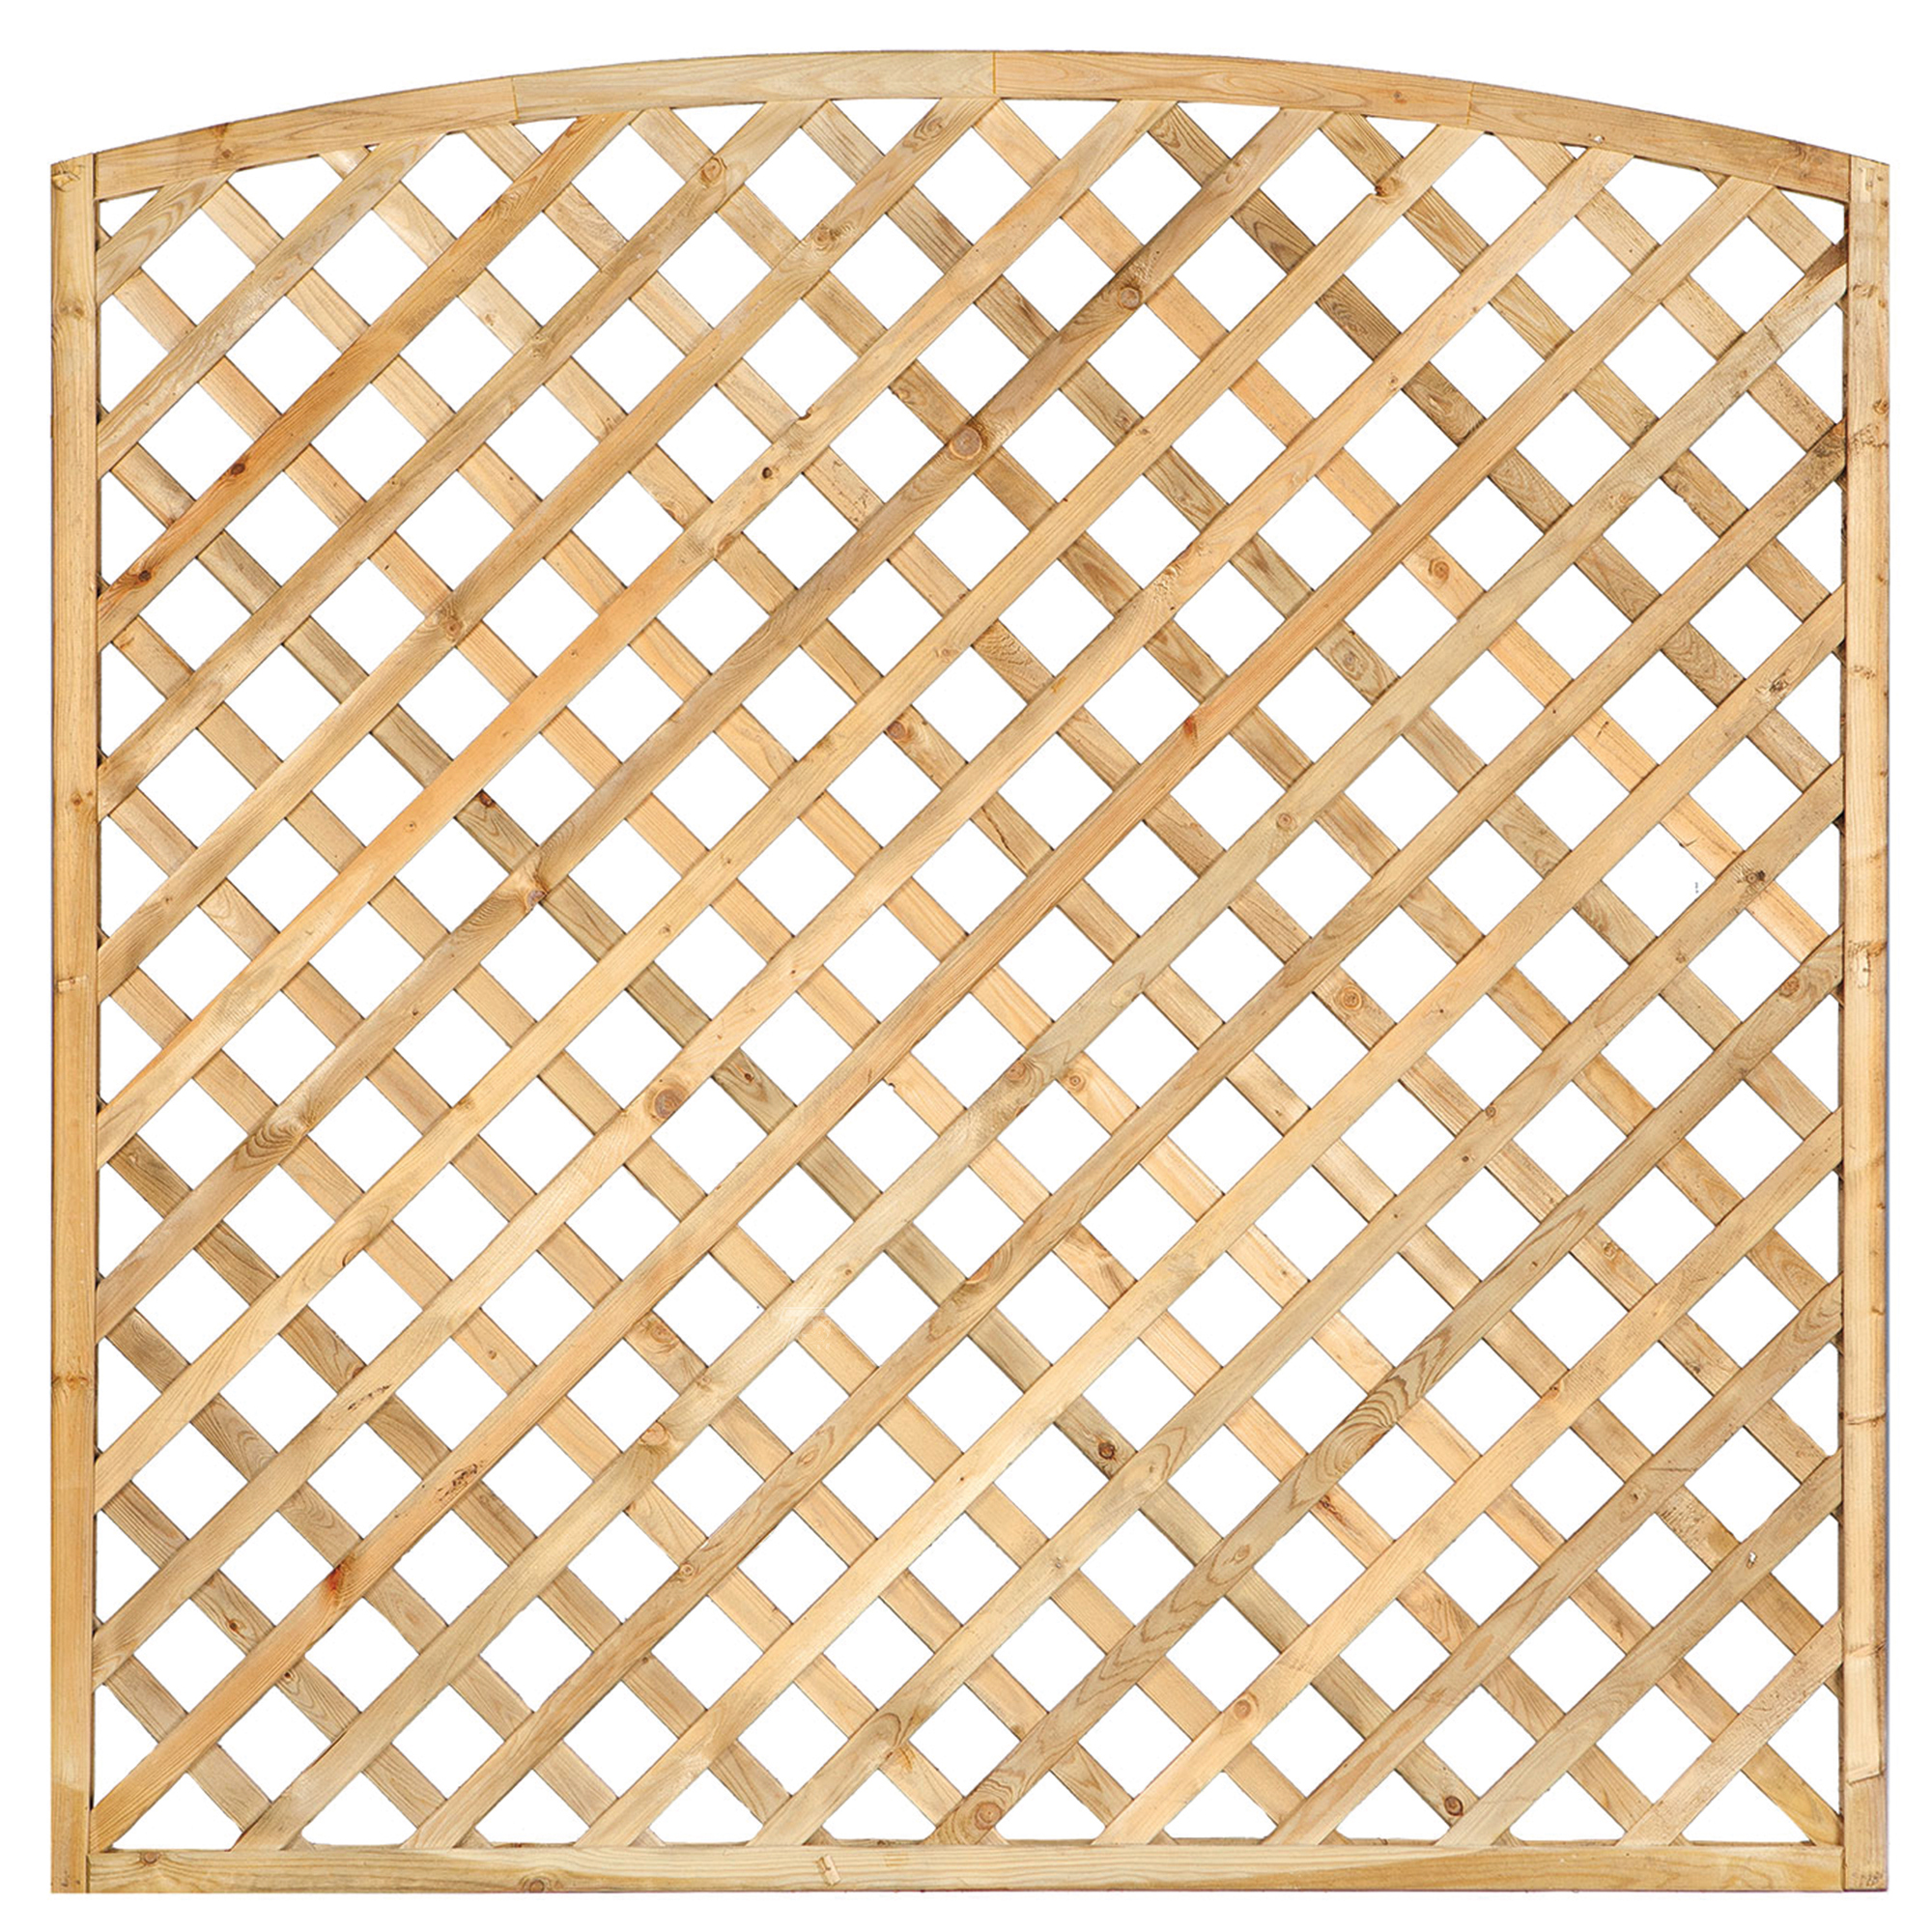 Spalier diagonal mit gebogenem Rahmen, H 180 cm